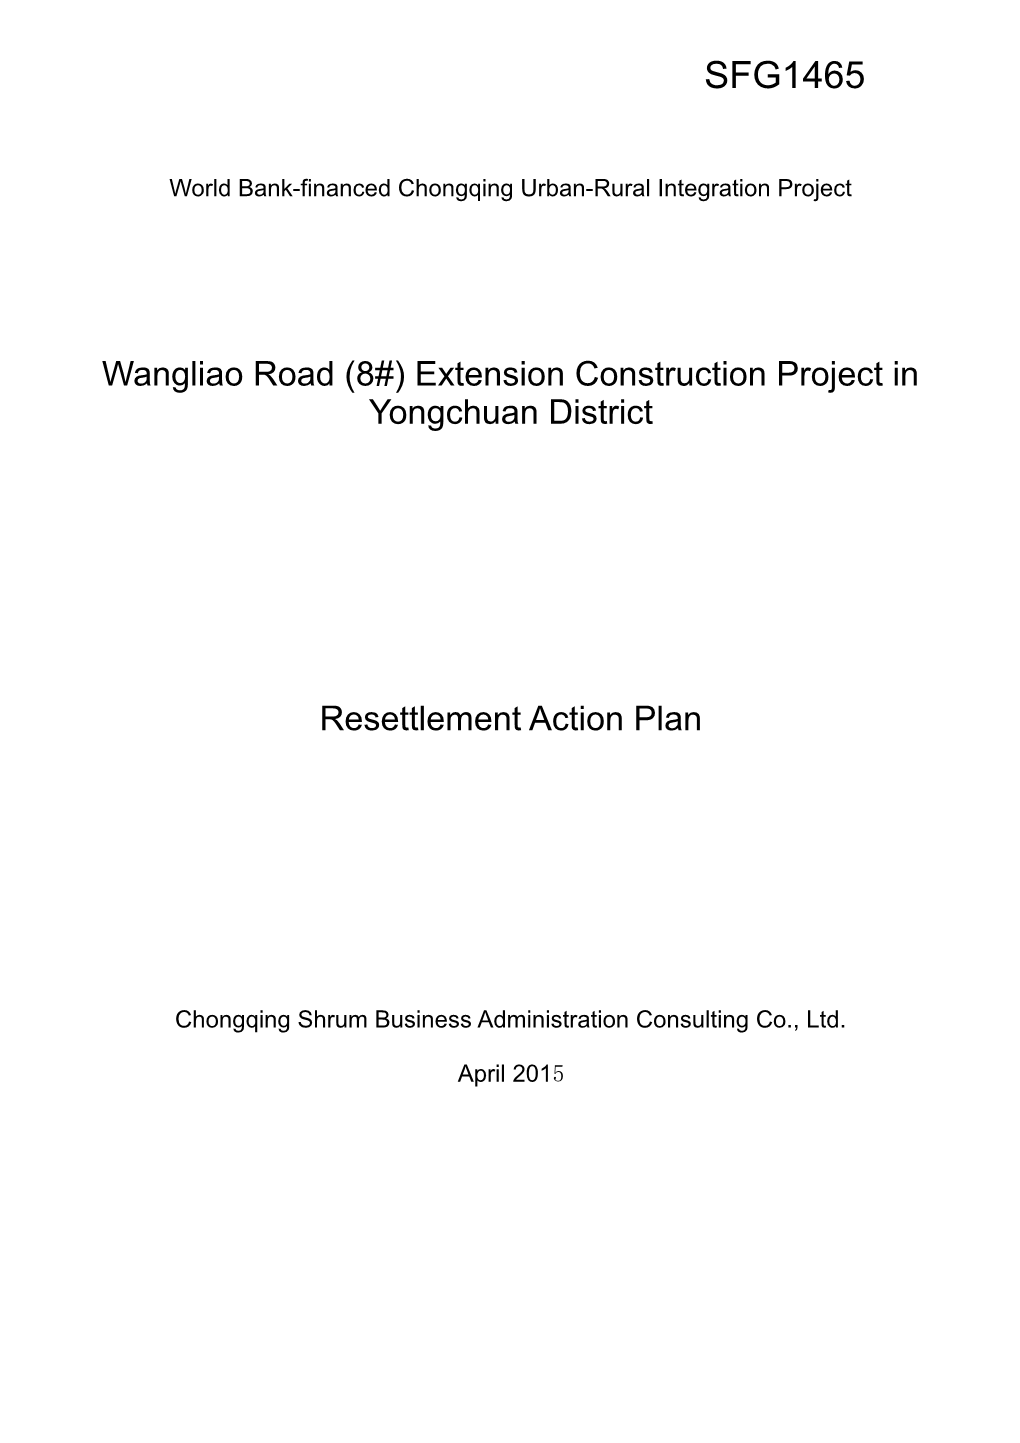 World Bank-Financed Chongqing Urban-Rural Integration Project